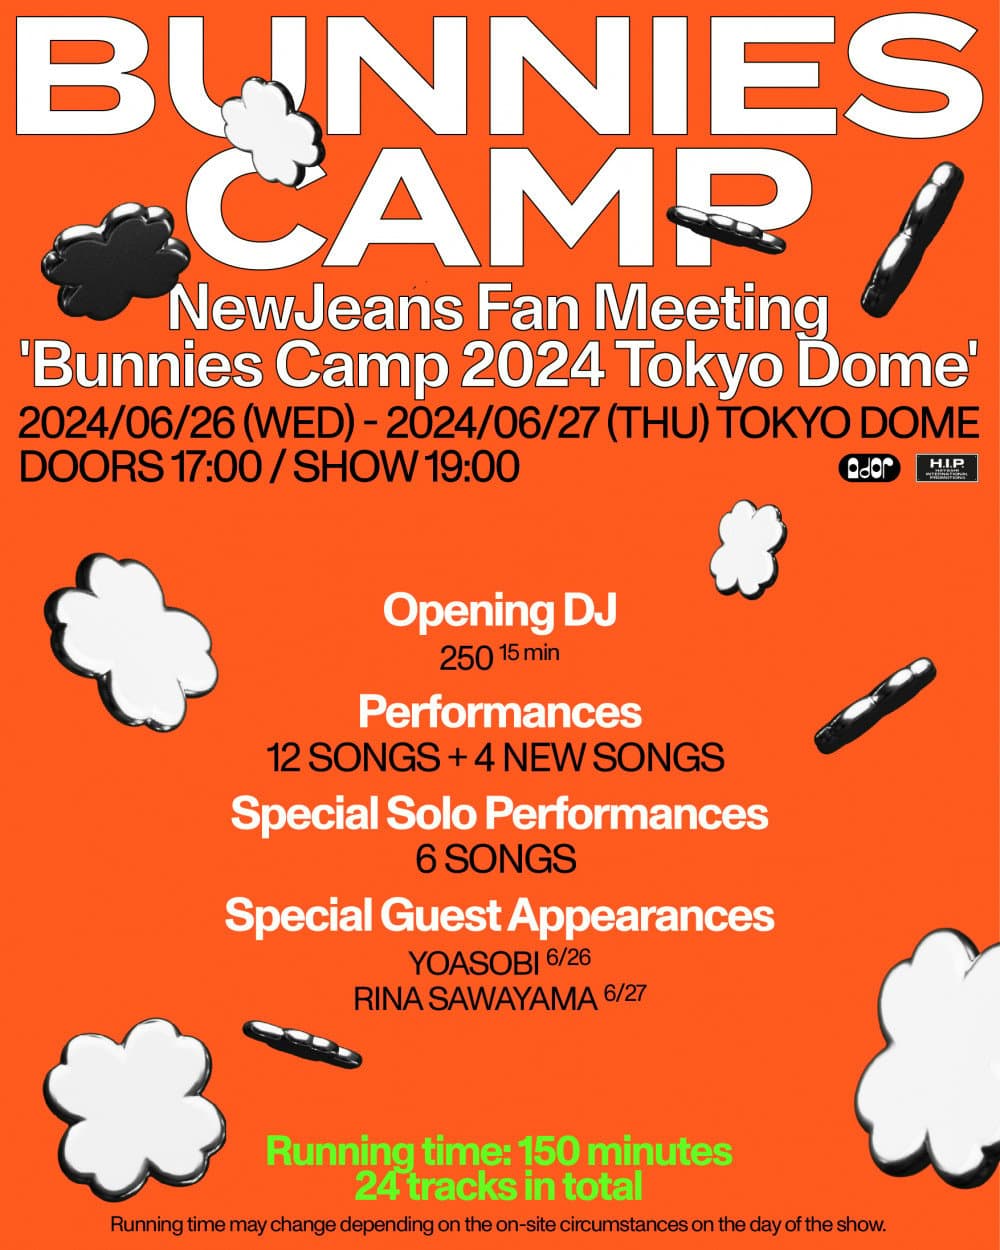 NewJeans планируют представить 24 трека, включая 4 новых, на фанмитинге в Tokyo Dome